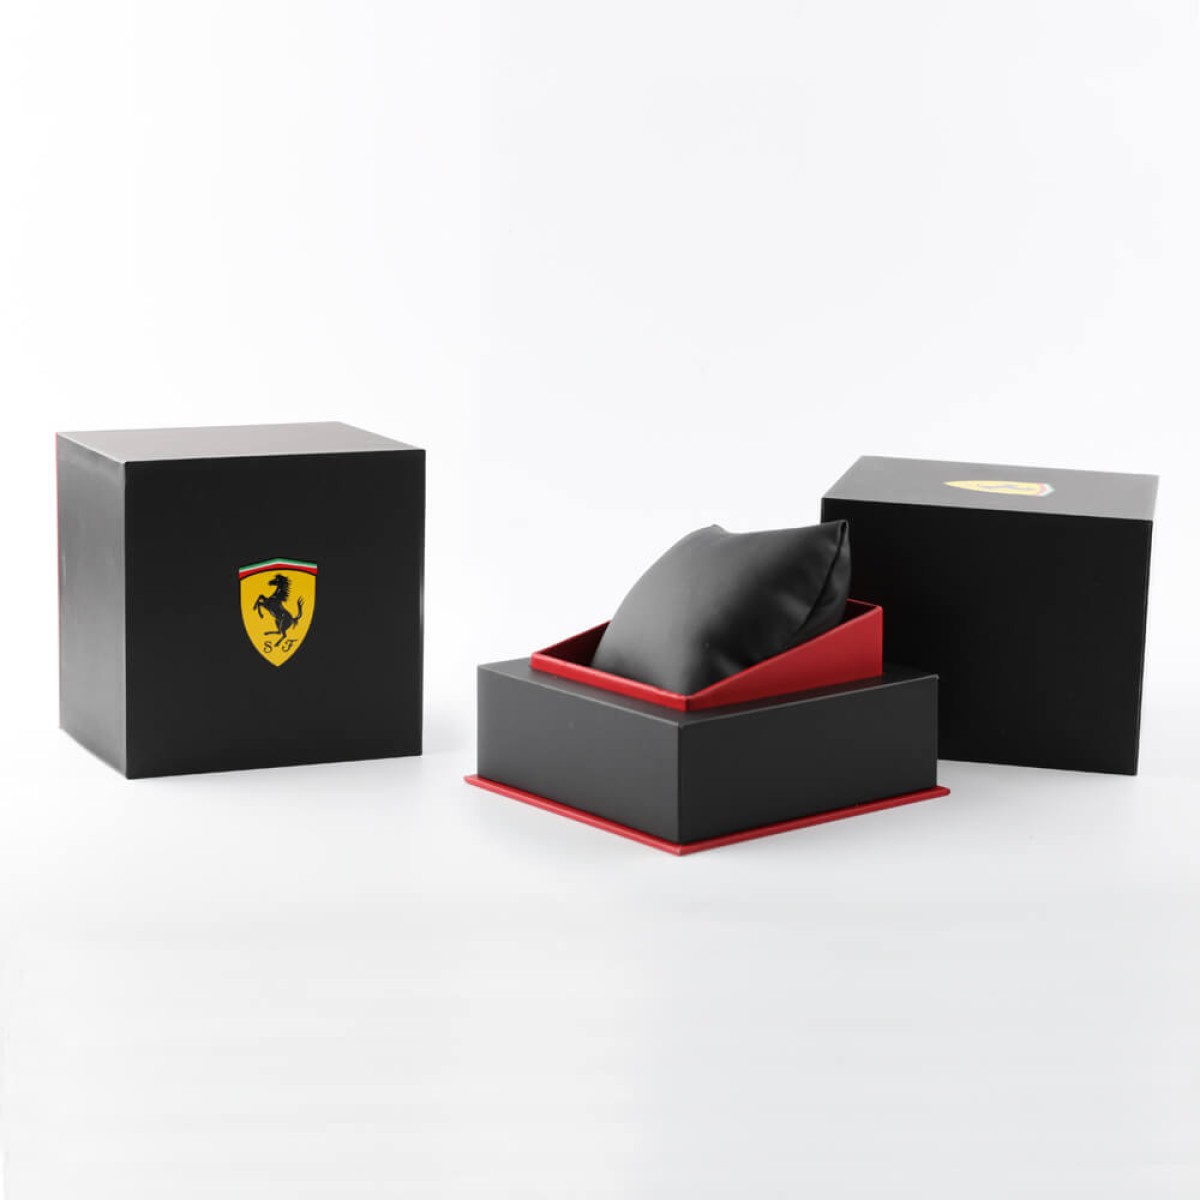 Watch - Scuderia Ferrari - Evo Pilota Chronograph - 0830713